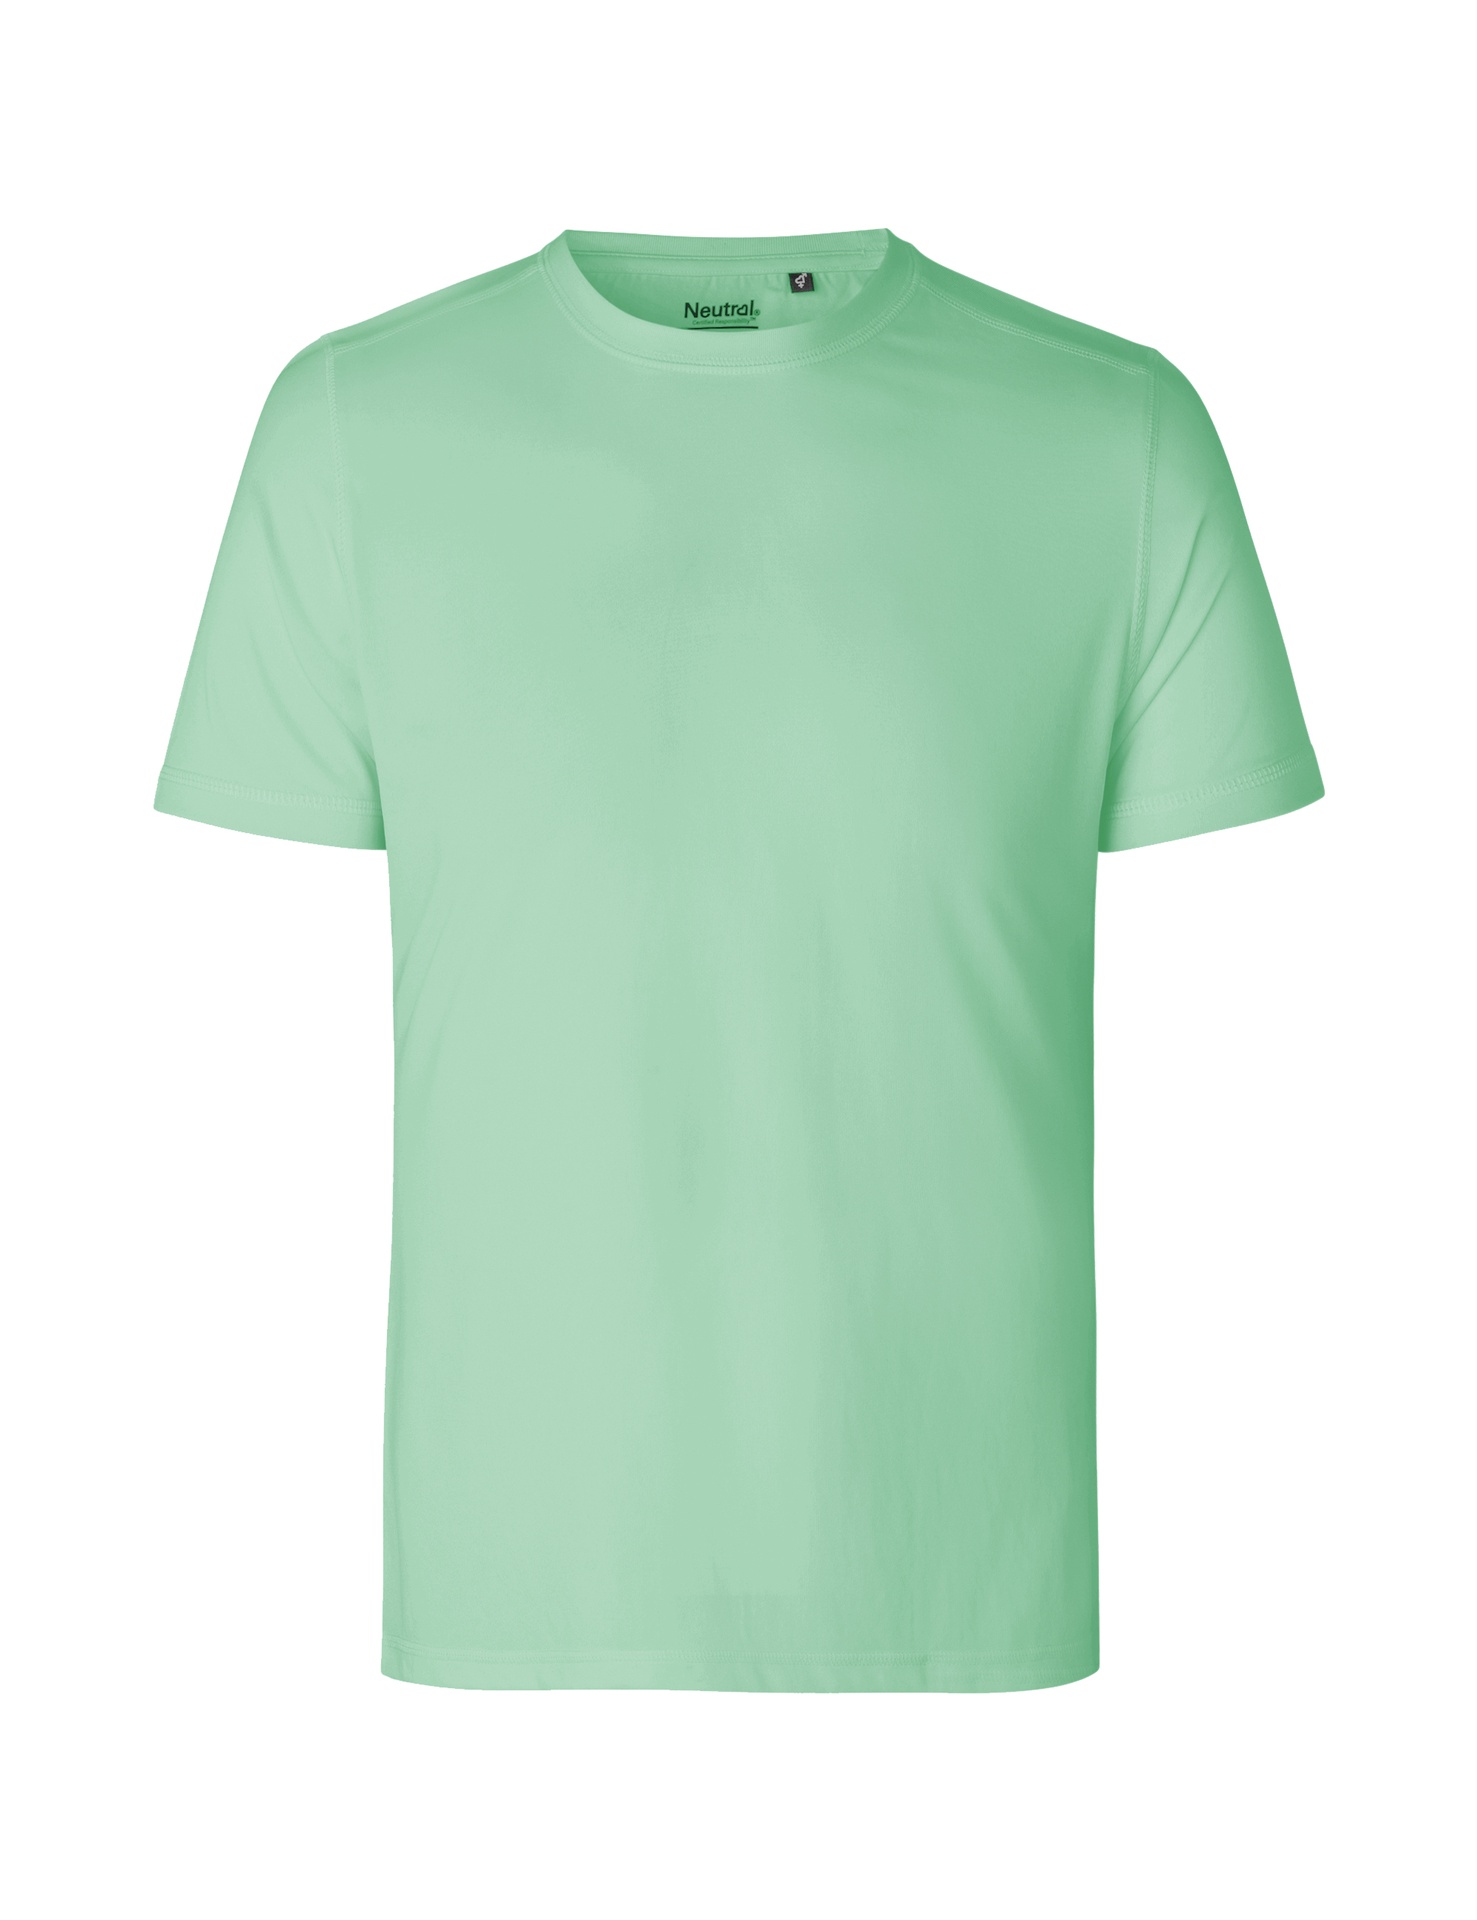 [PR/03799] Recycled Performance T-Shirt (Dusty Mint 40, XL)